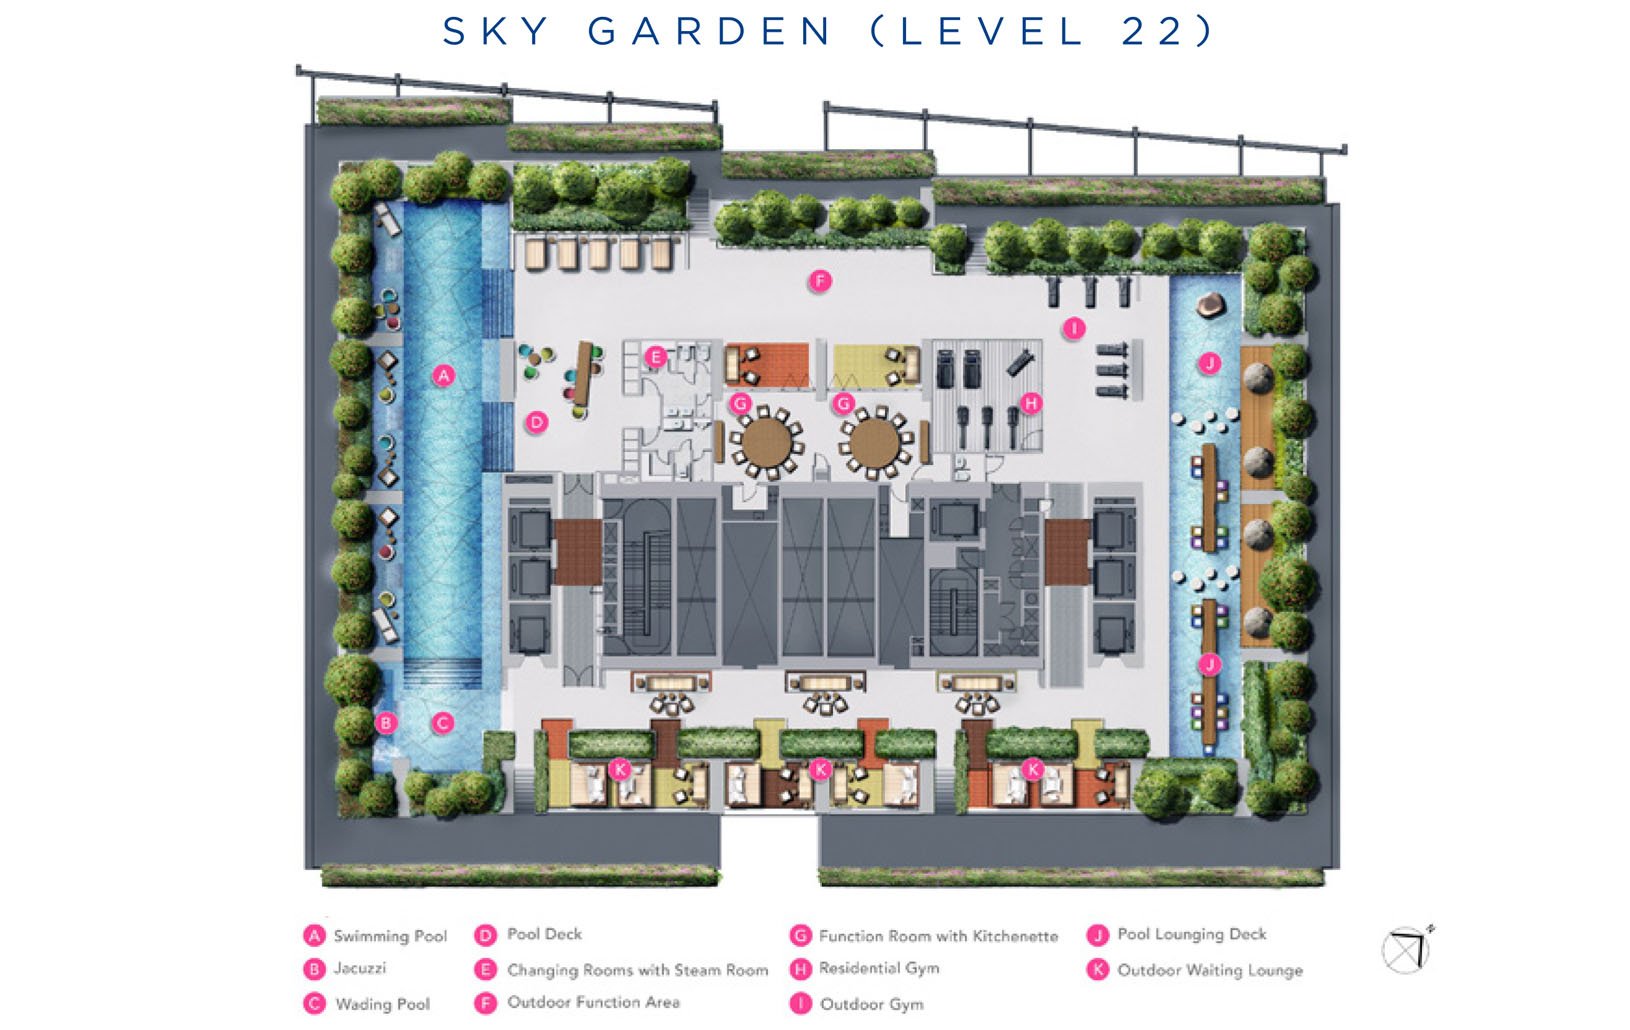 South Beach Residences Sky Garden - Level 22